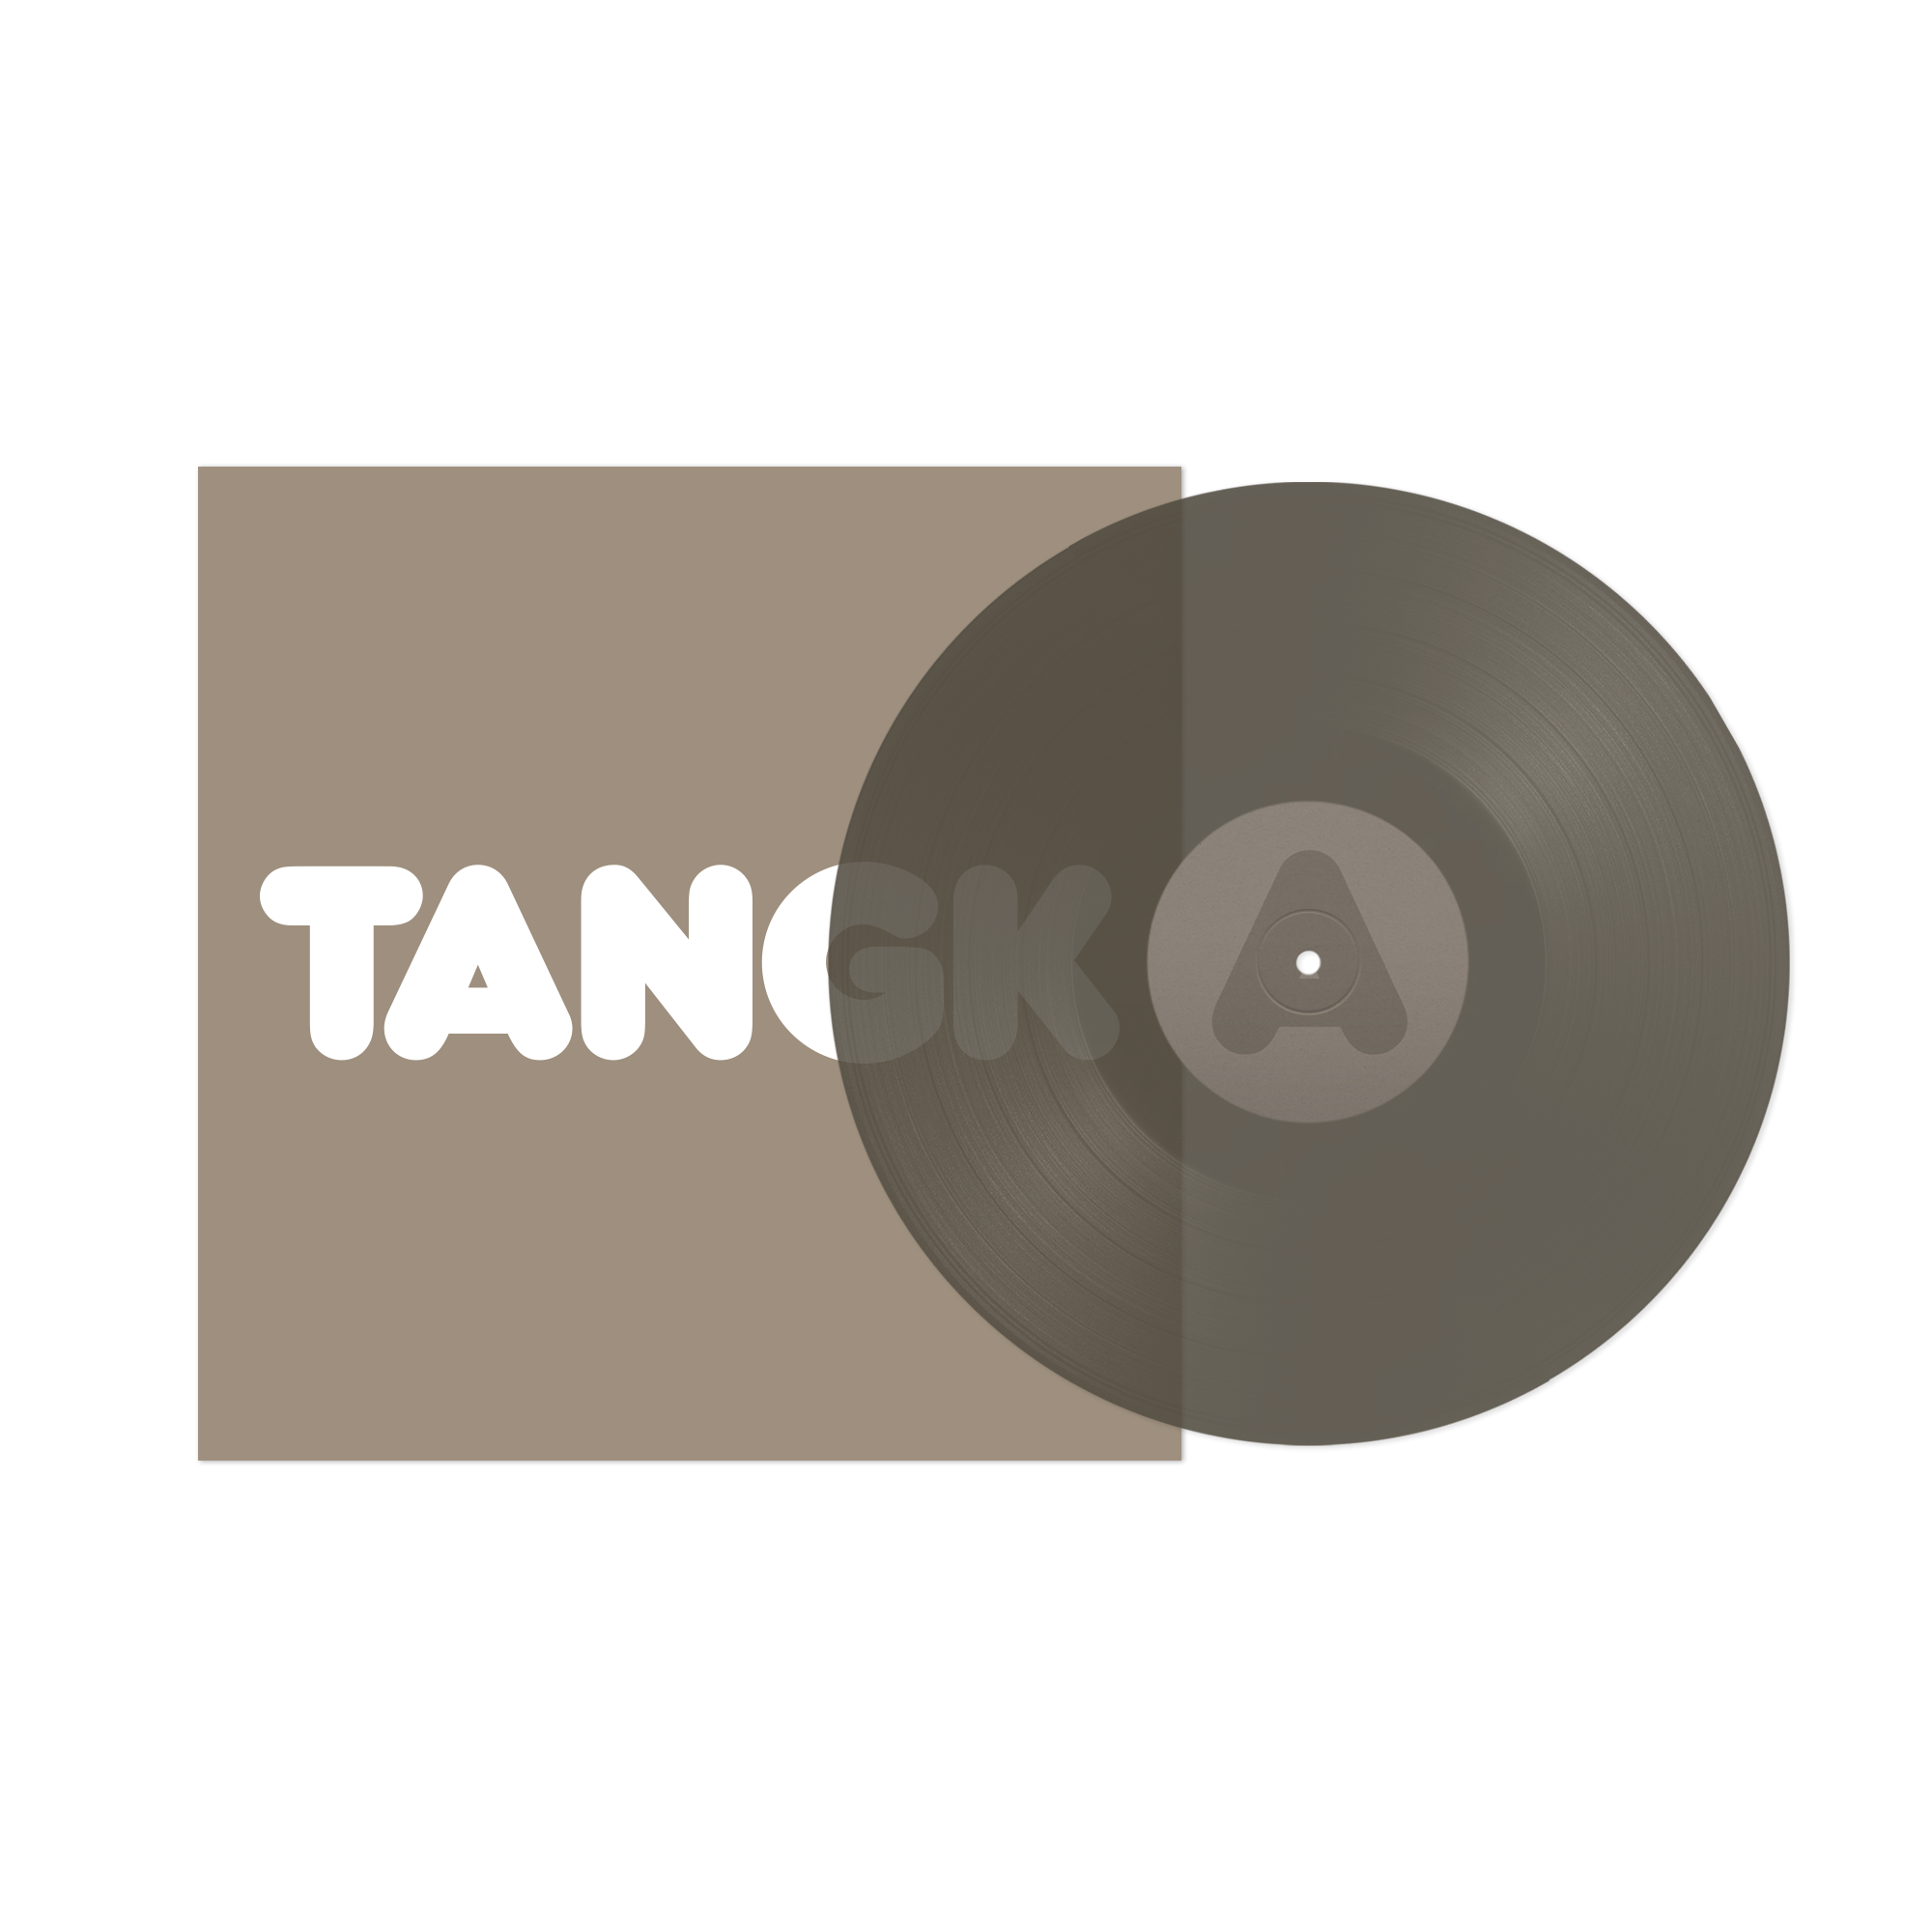 TANGK (Limited Edition Collector’s D2C Exclusive PVC LP) + VENN HOODIE BUNDLE